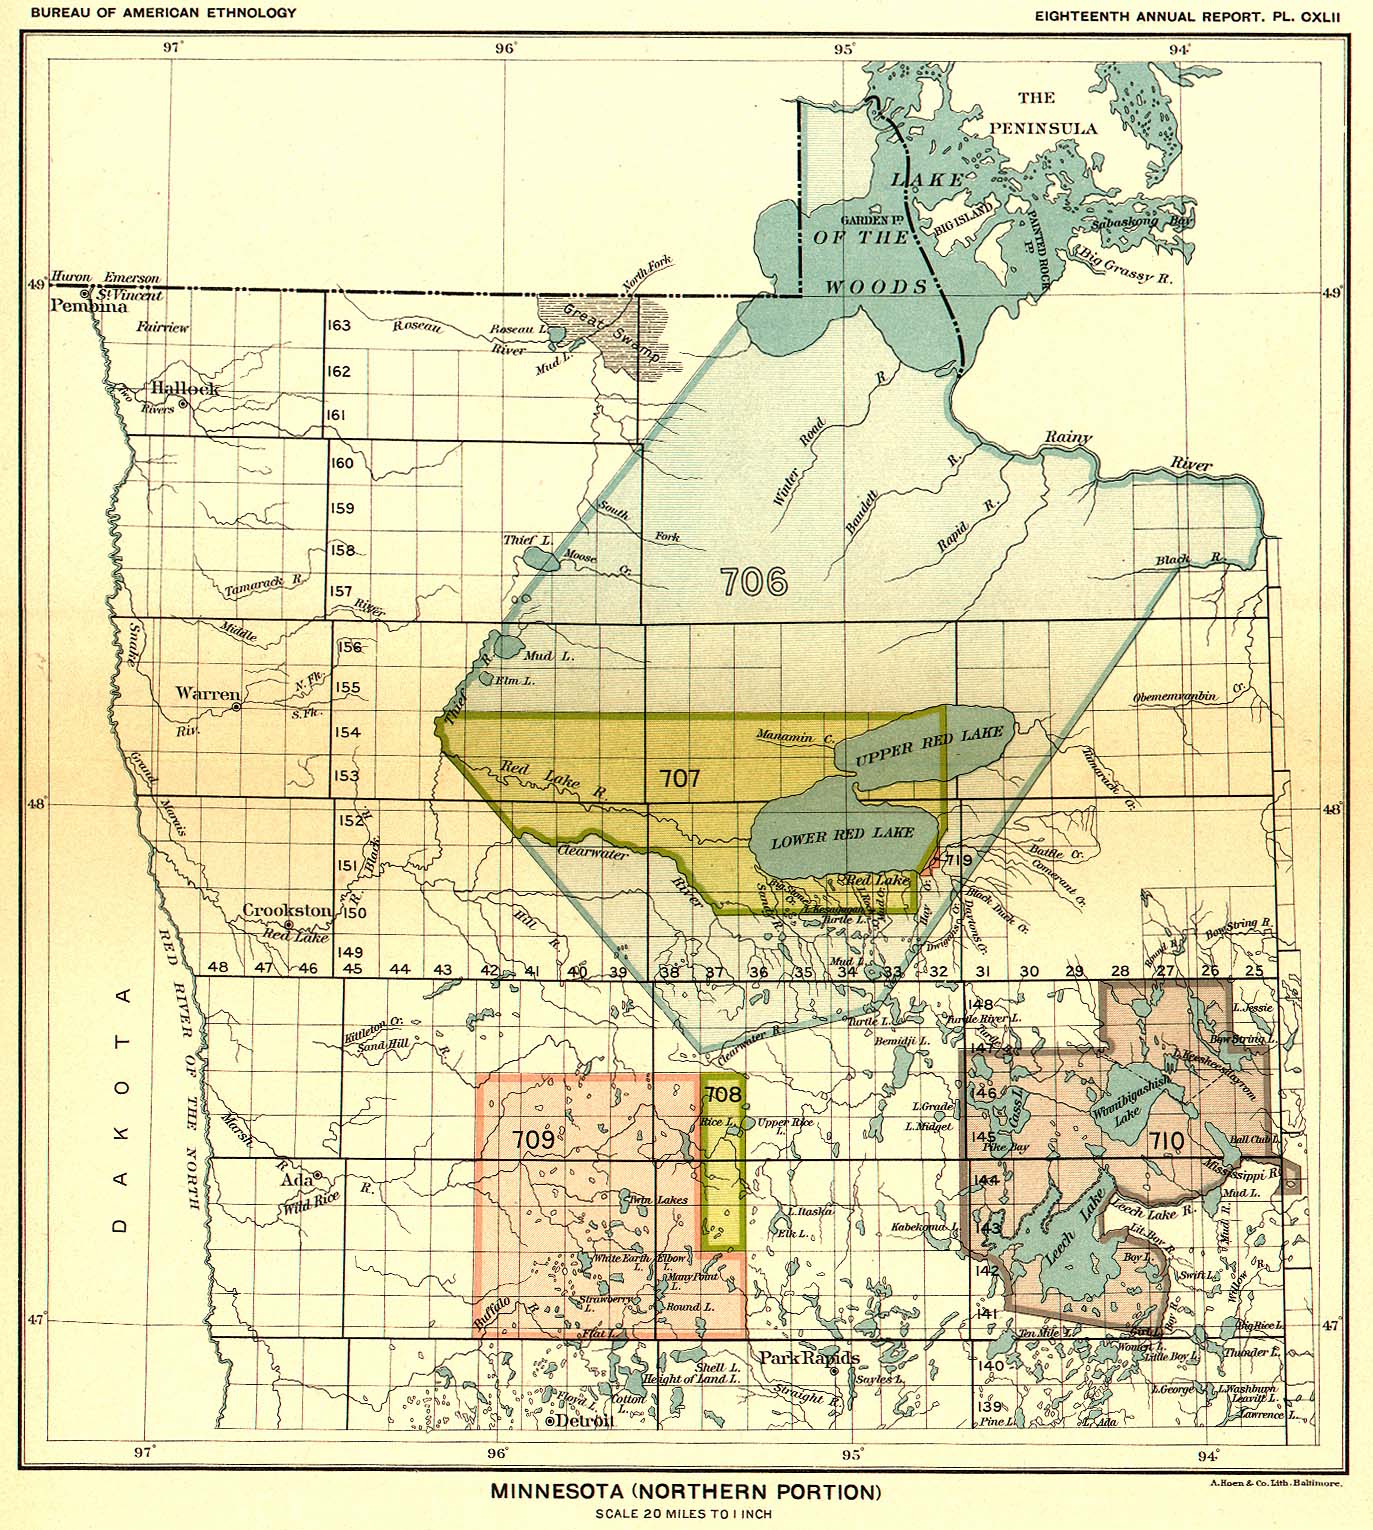  Minnesota (Northern Portion), Map 
35